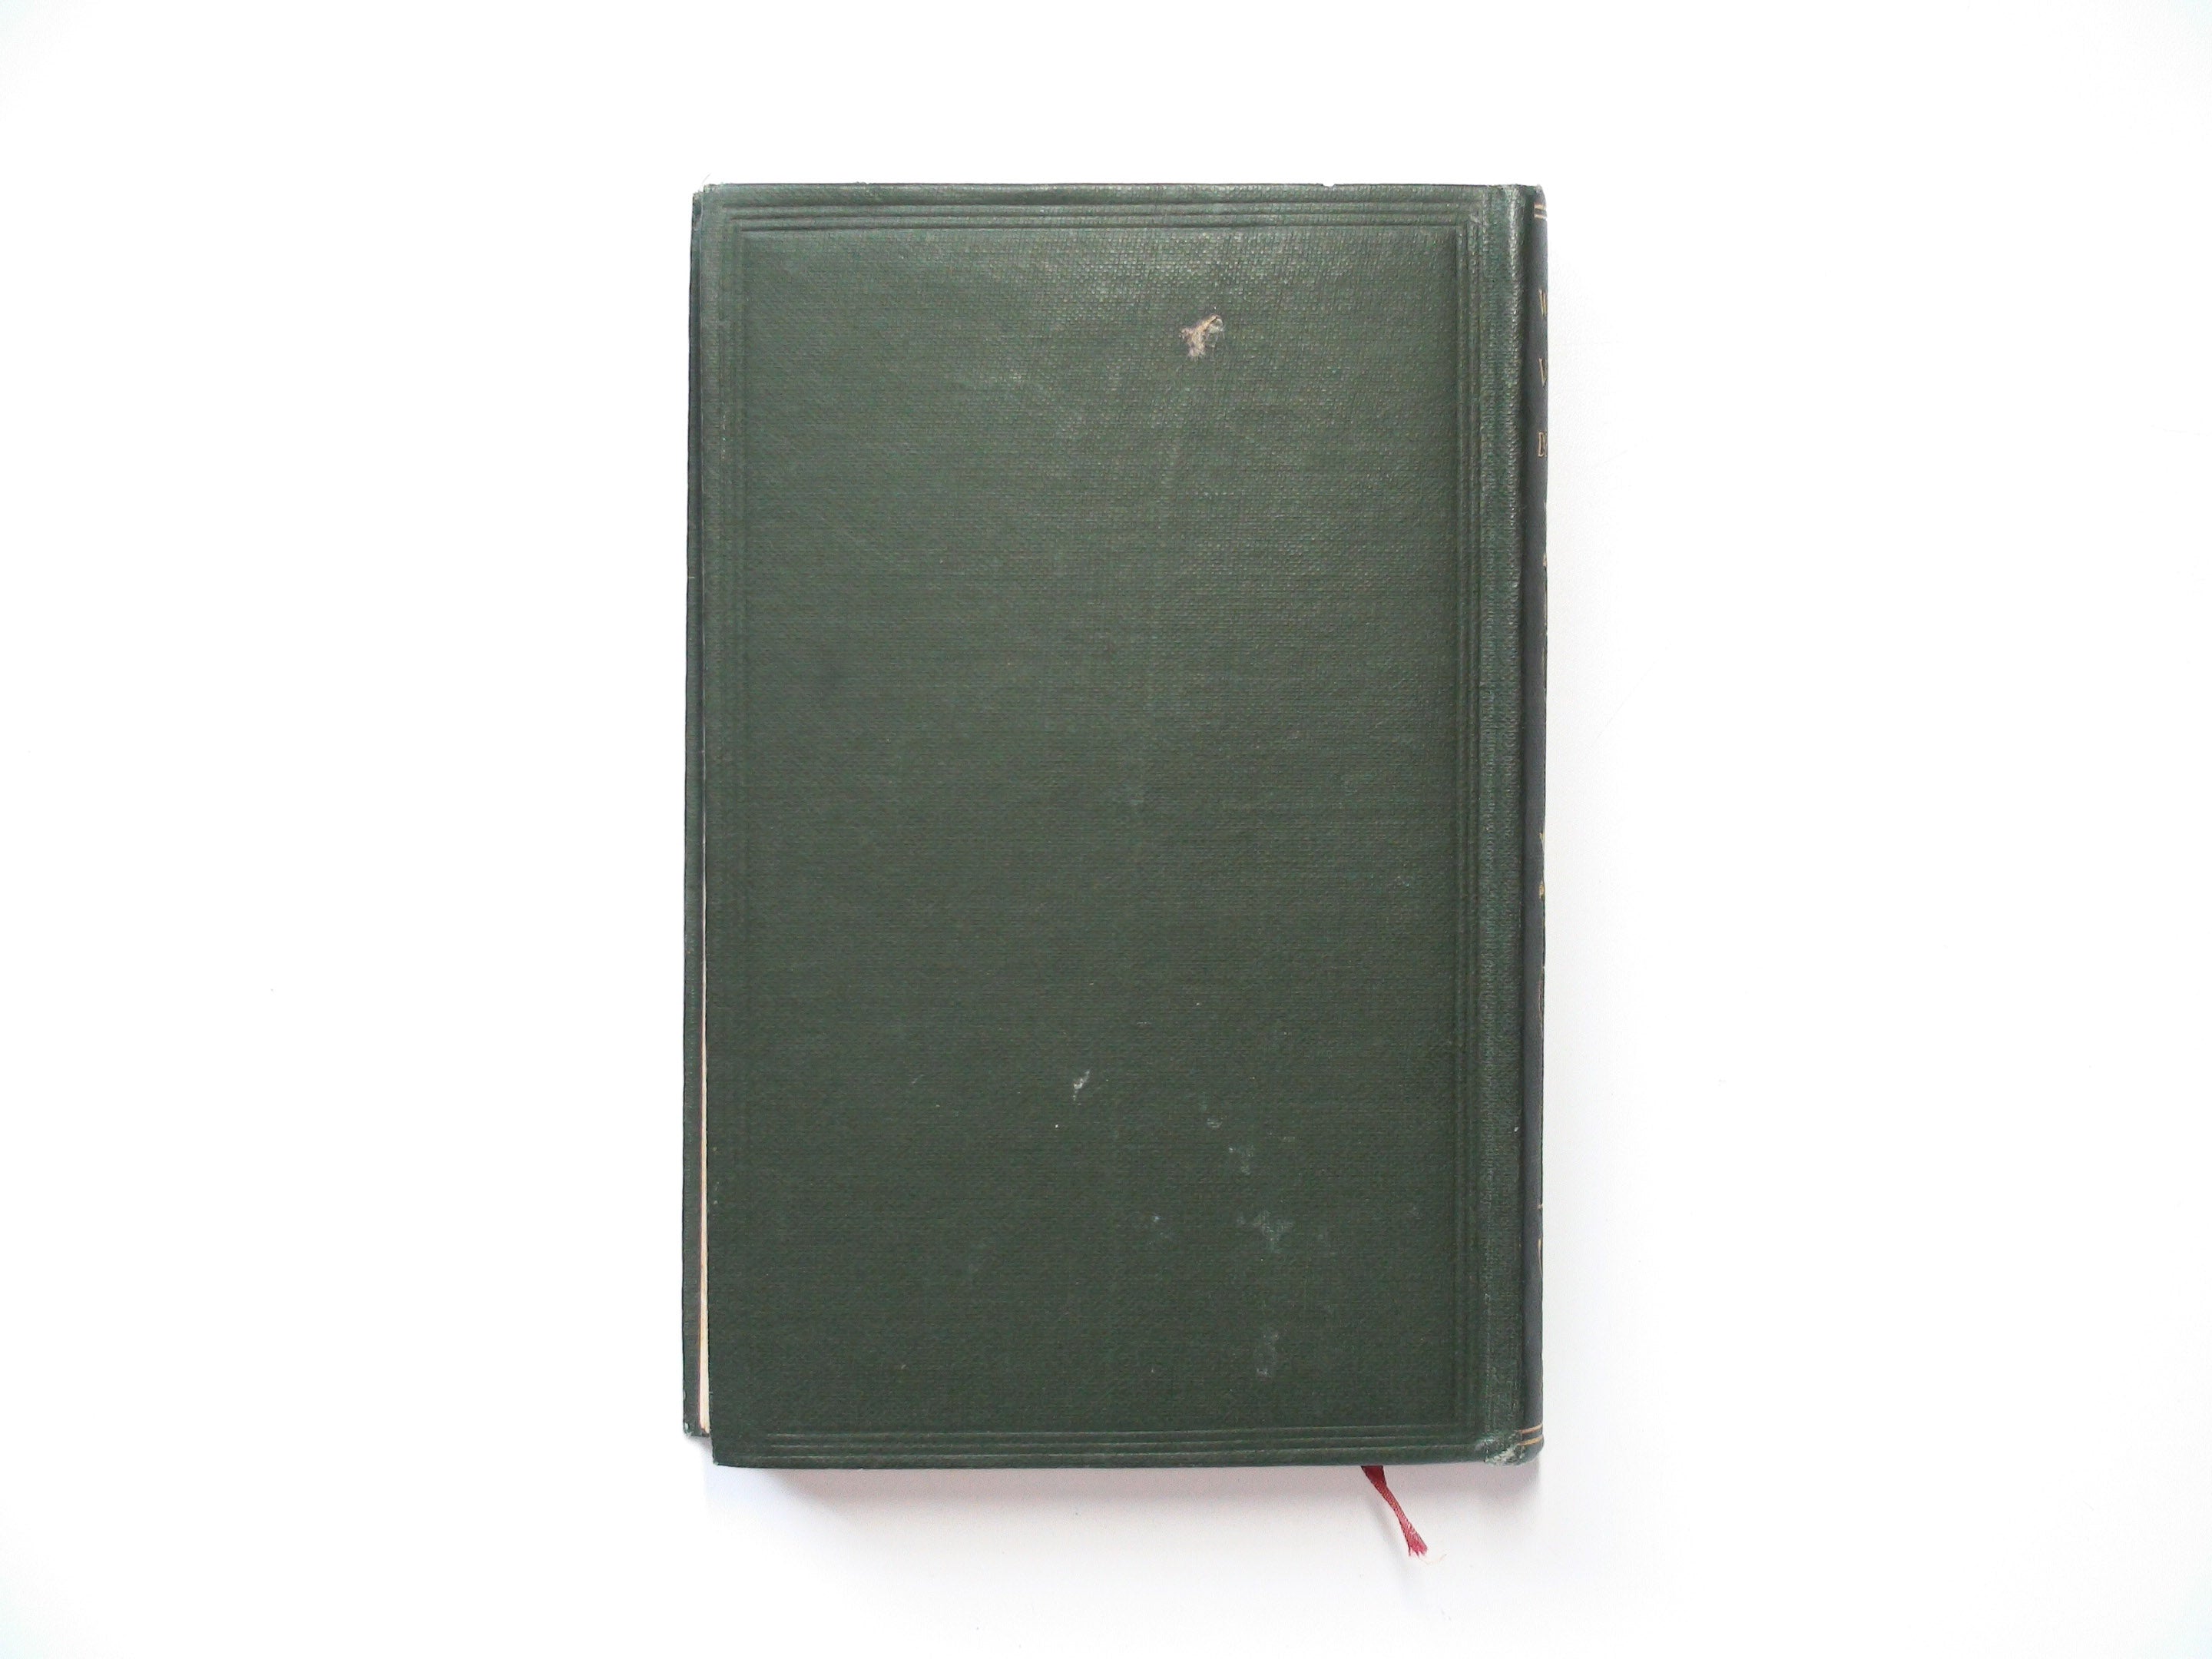 The Works of Virgil, Translated by John Dryden, 1967 Reprint of 1903 Original